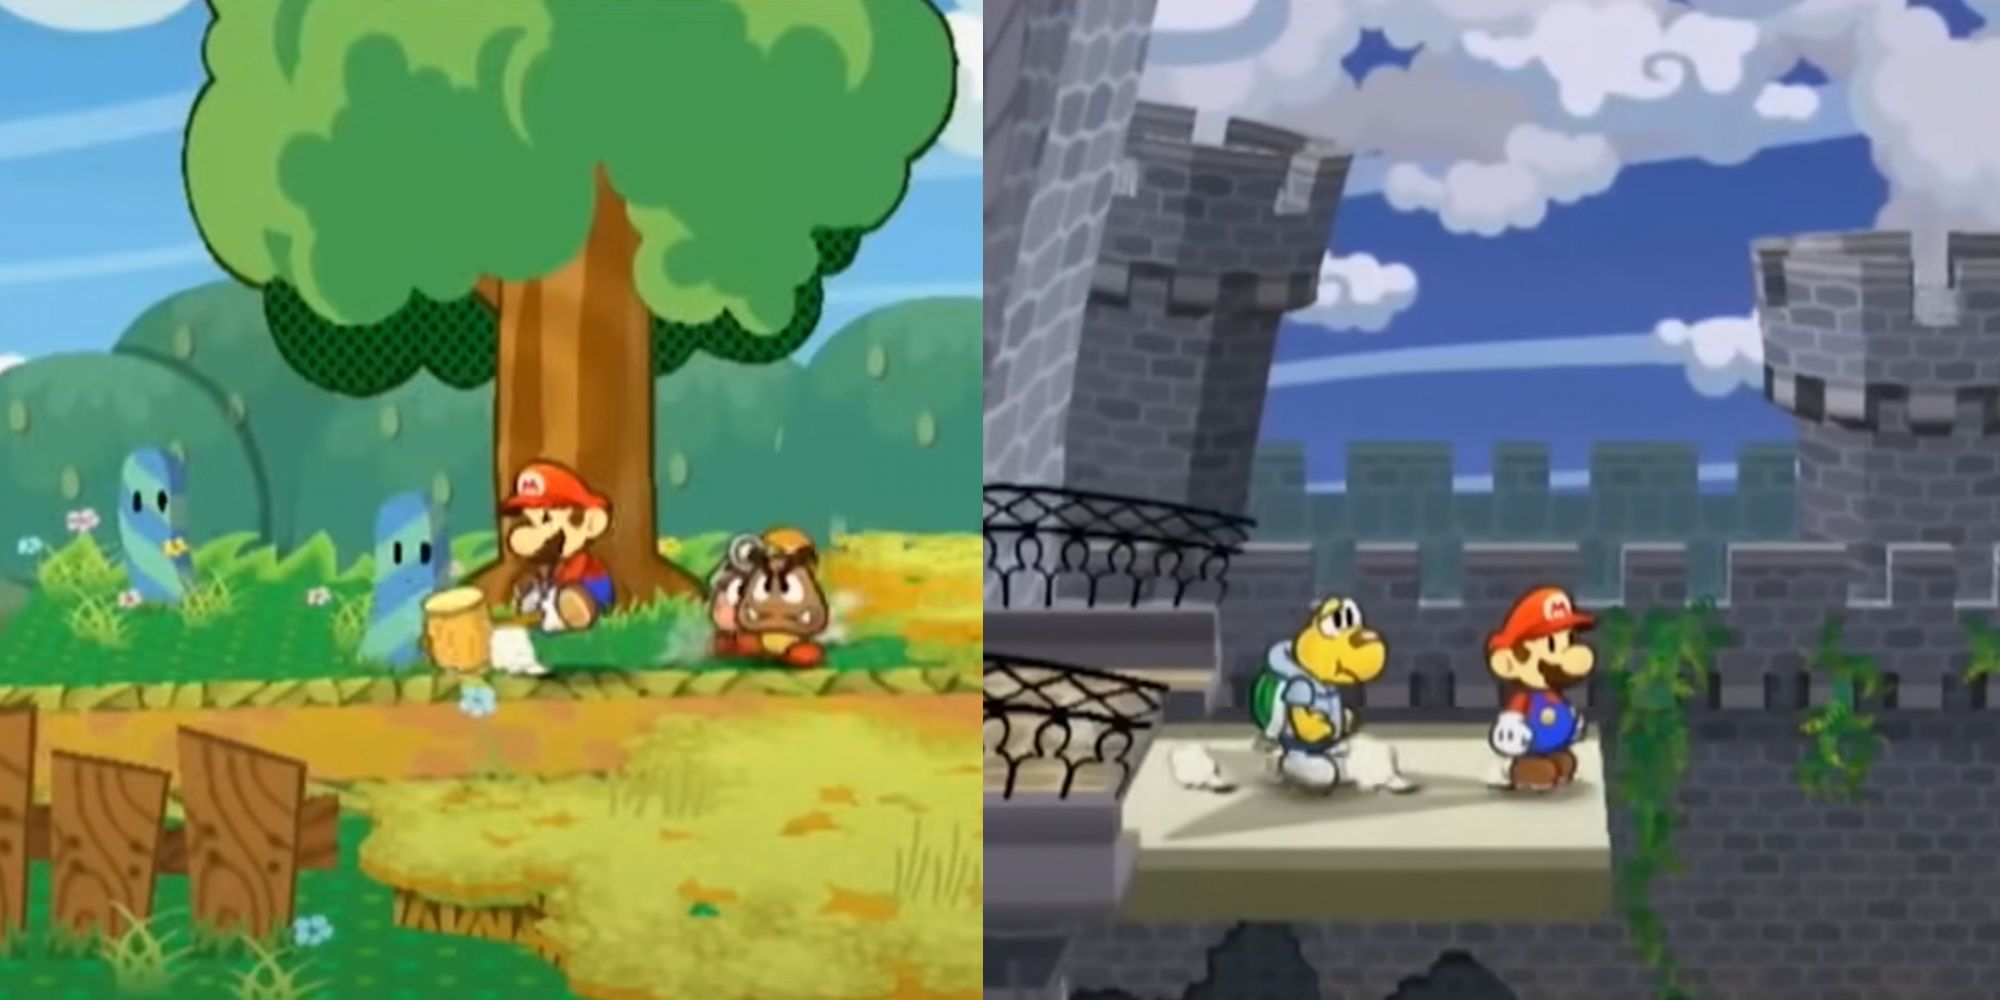 Paper Mario가 망치로 무언가를 강타하고 있고, Mario와 Koopa가 다리 끝에 서 있는 모습